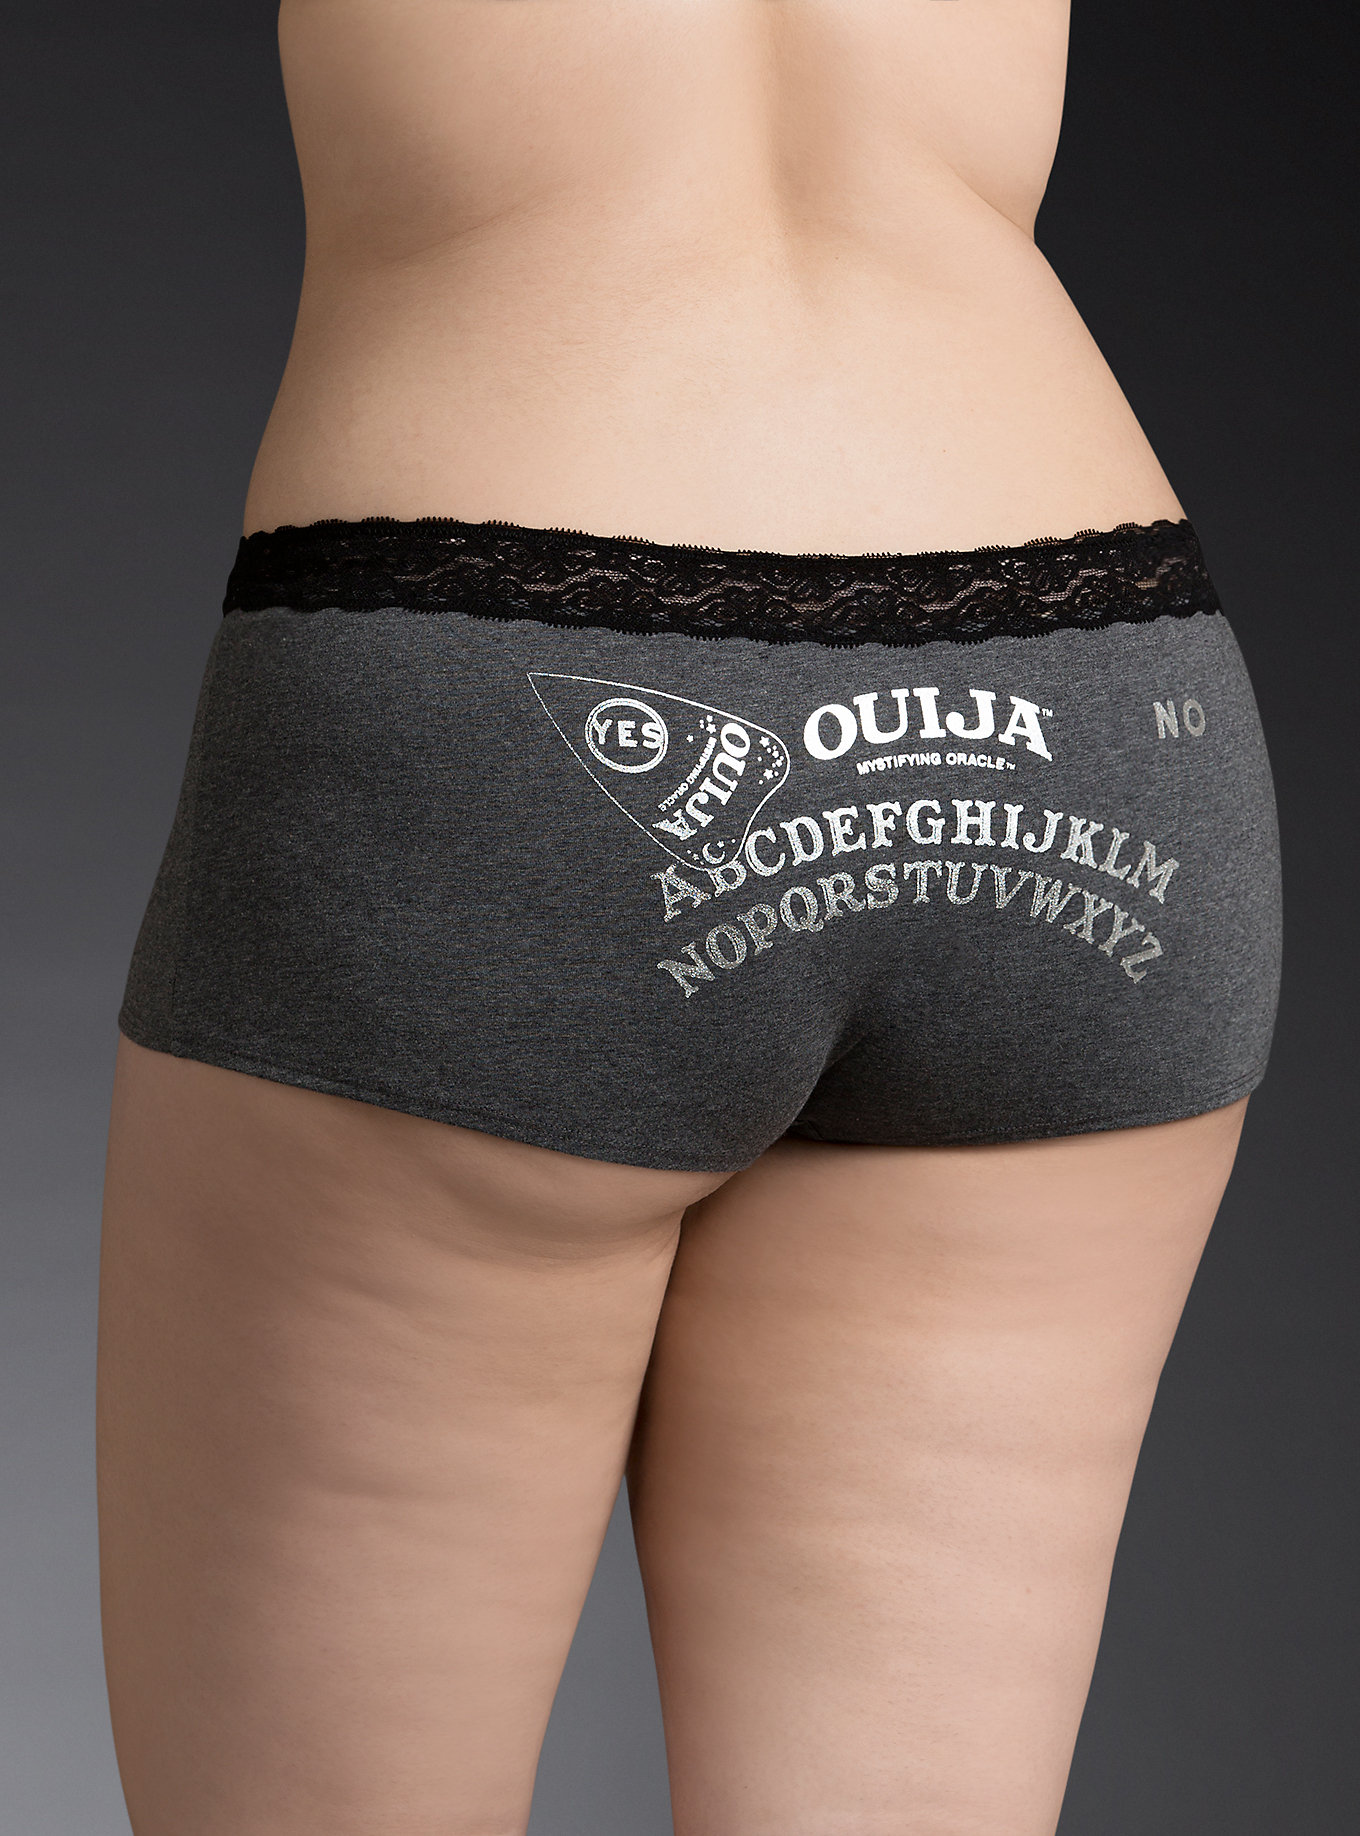 Ouija Board panties